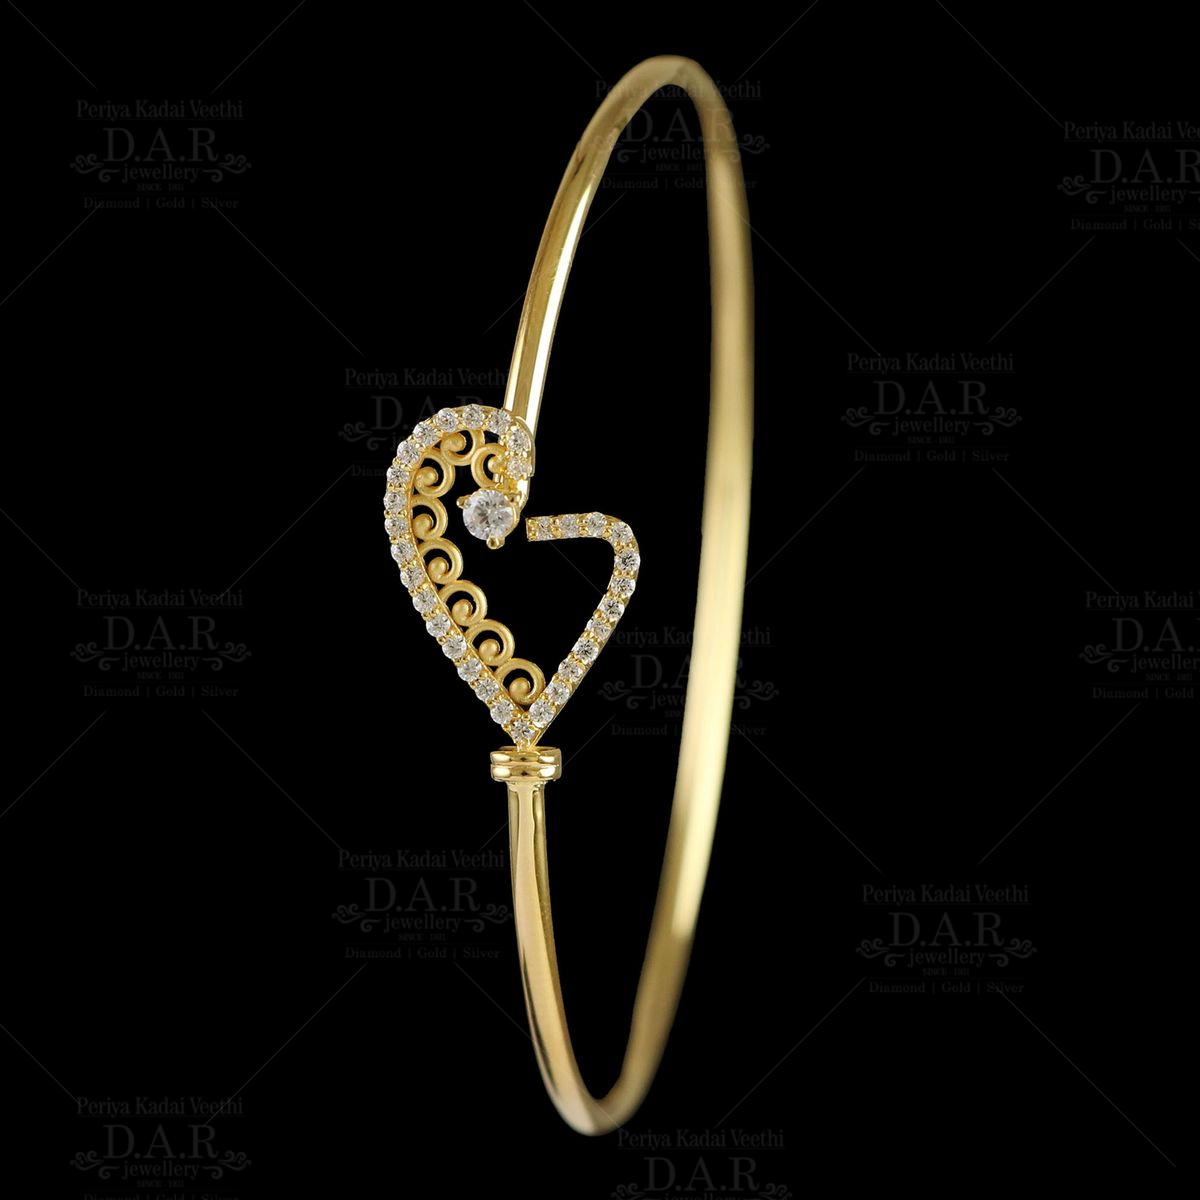 Buy Memoir Gold plated Heart shaped linked sober, Stylish fashion bracelet  Women Girls Latest at Amazon.in